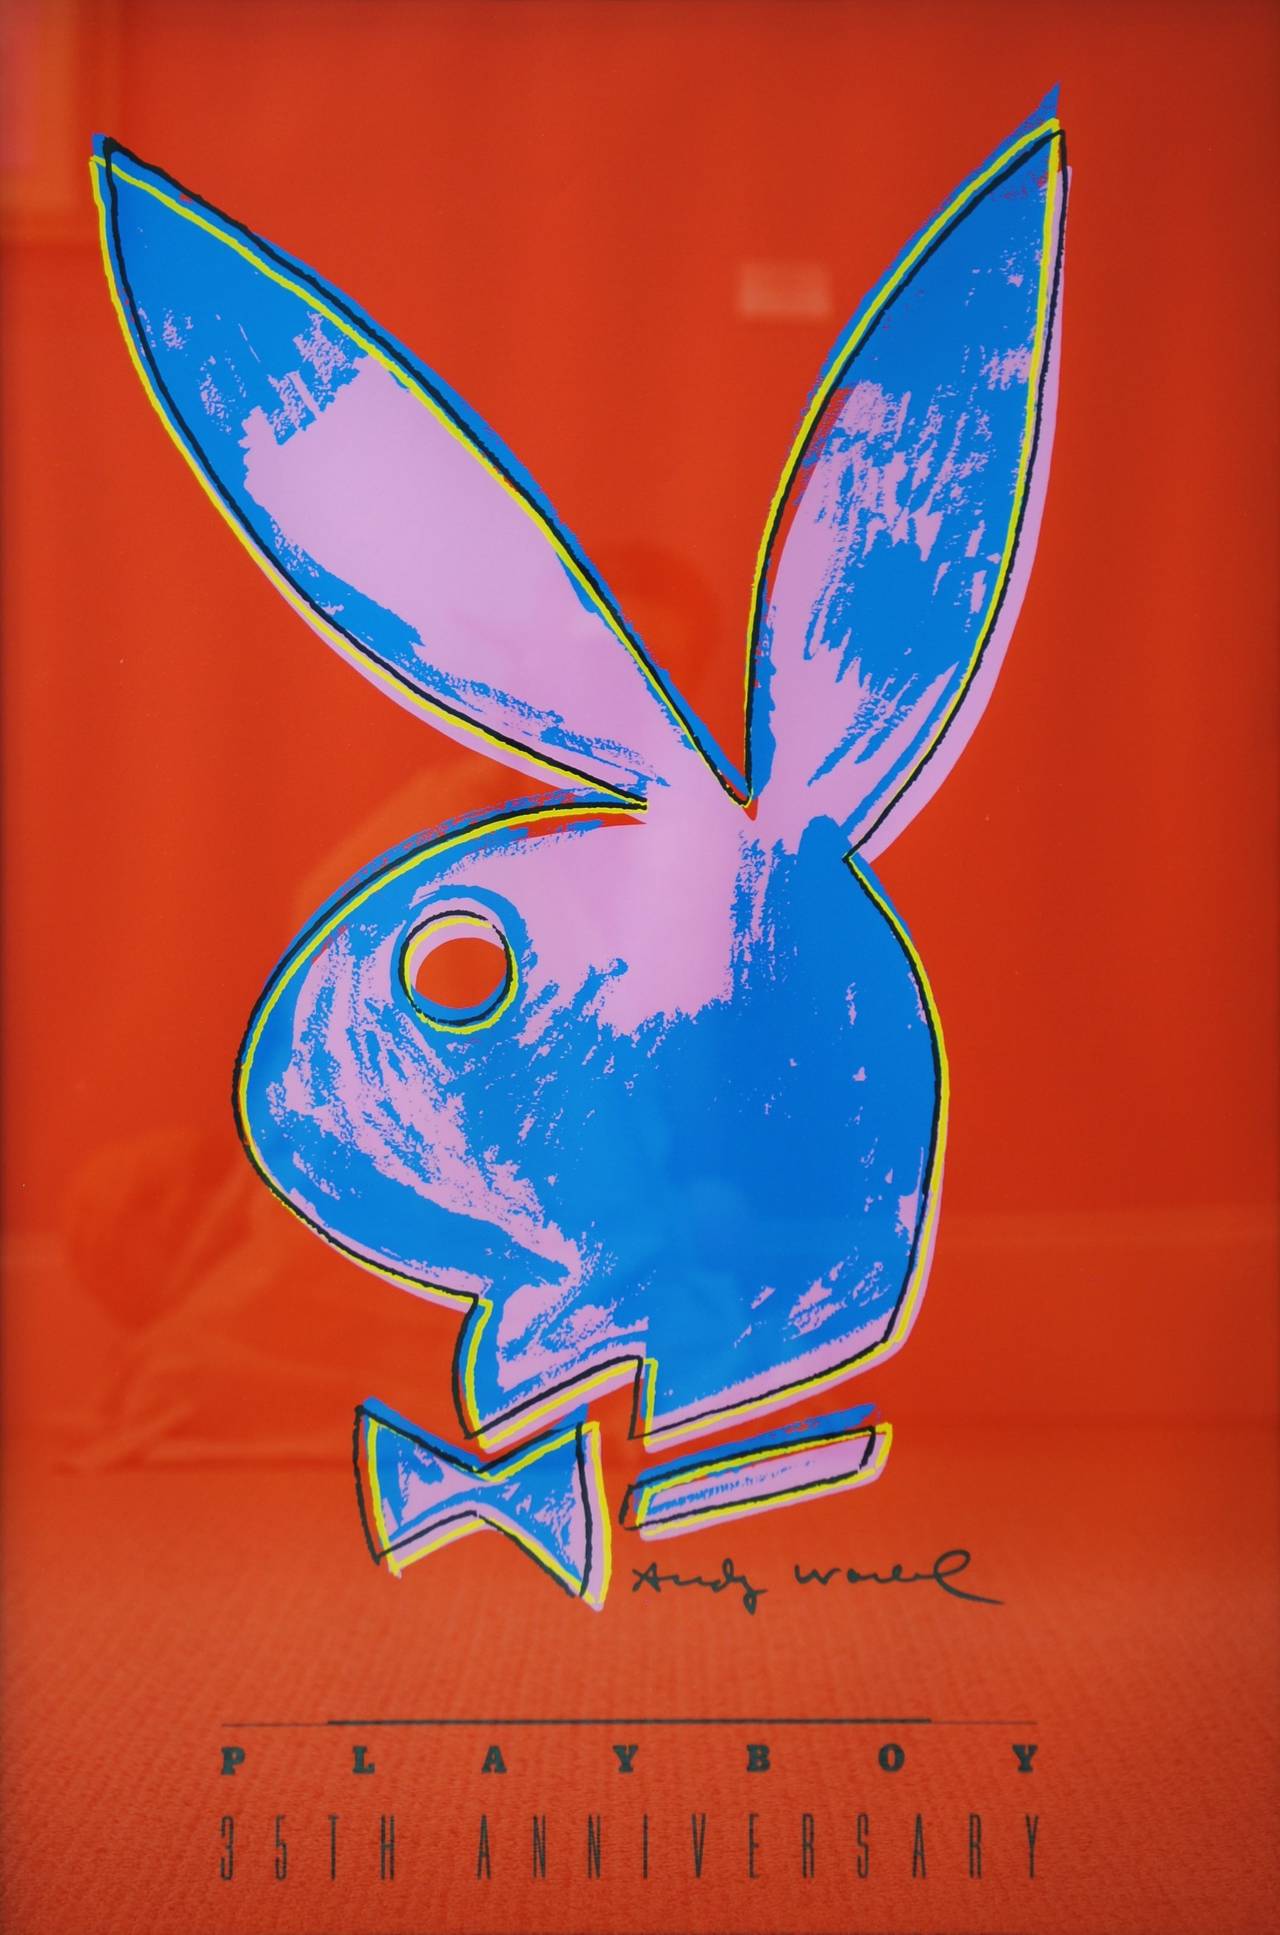 Andy Warhol Portrait Print - Playboy 35th Anniversary